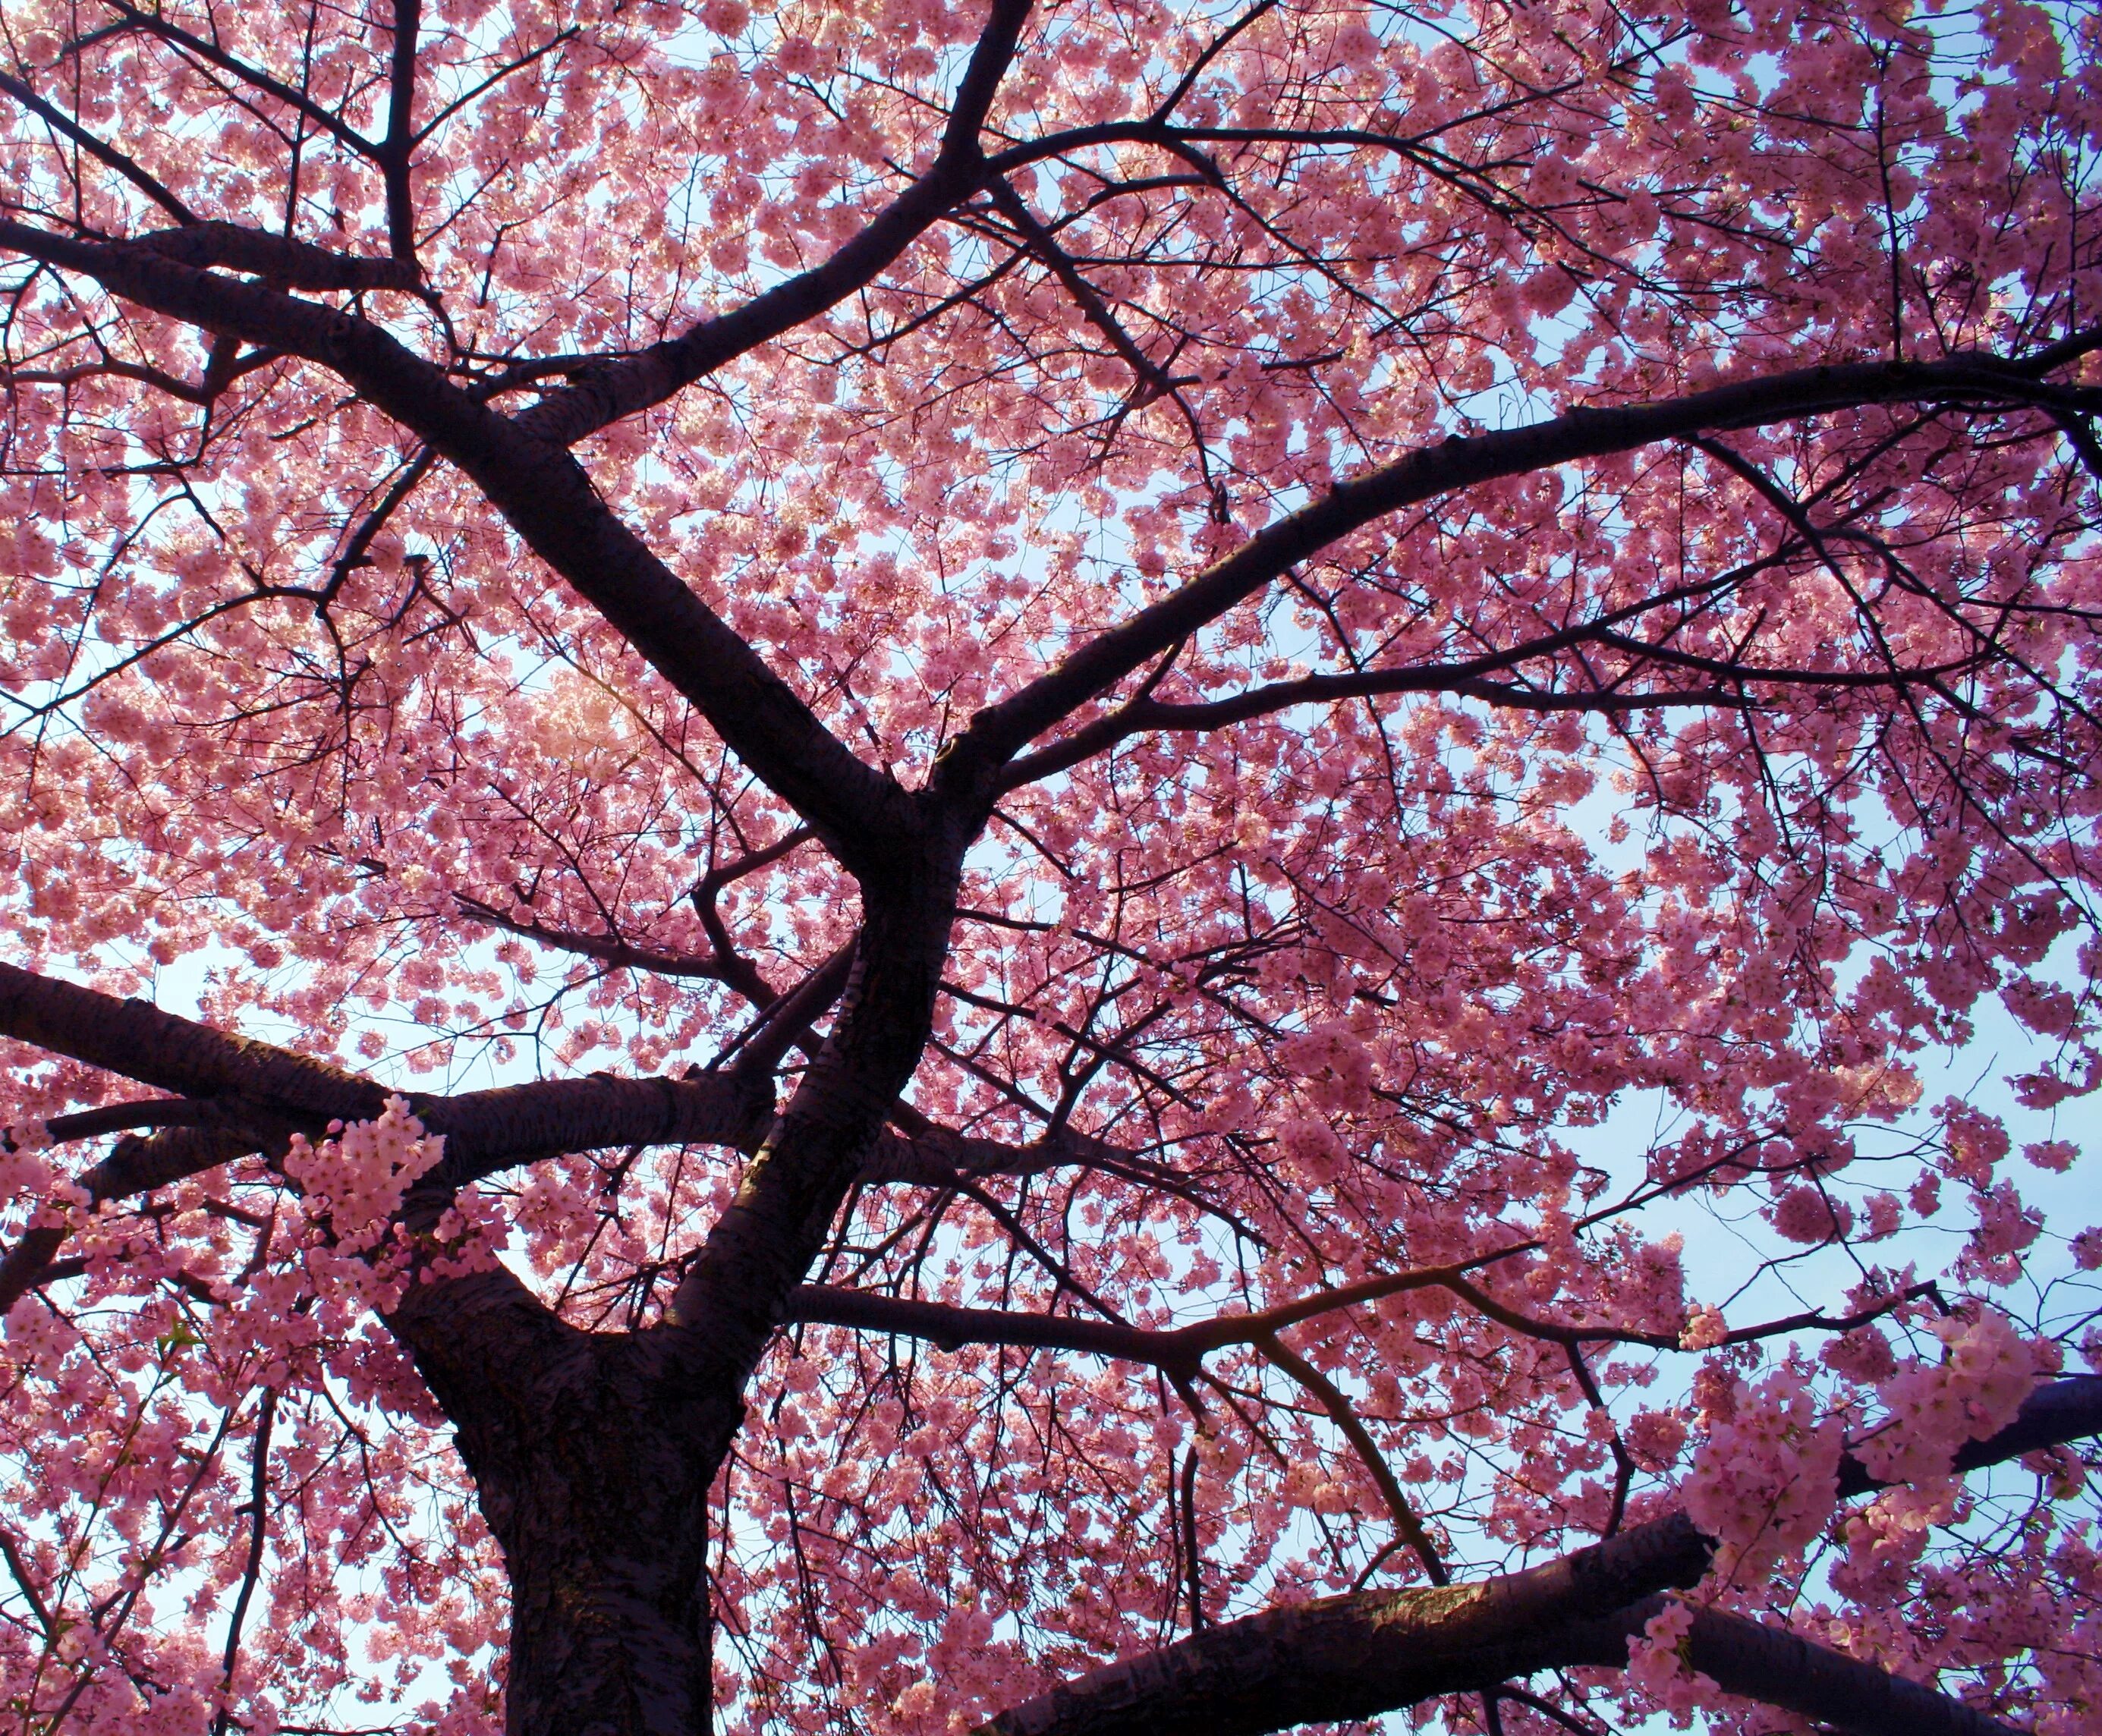 Черри блоссом дерево. Сакура черри блоссом дерево. Вишня Сакура дерево. Pink черри блоссом дерево деревья. Sakura blossom